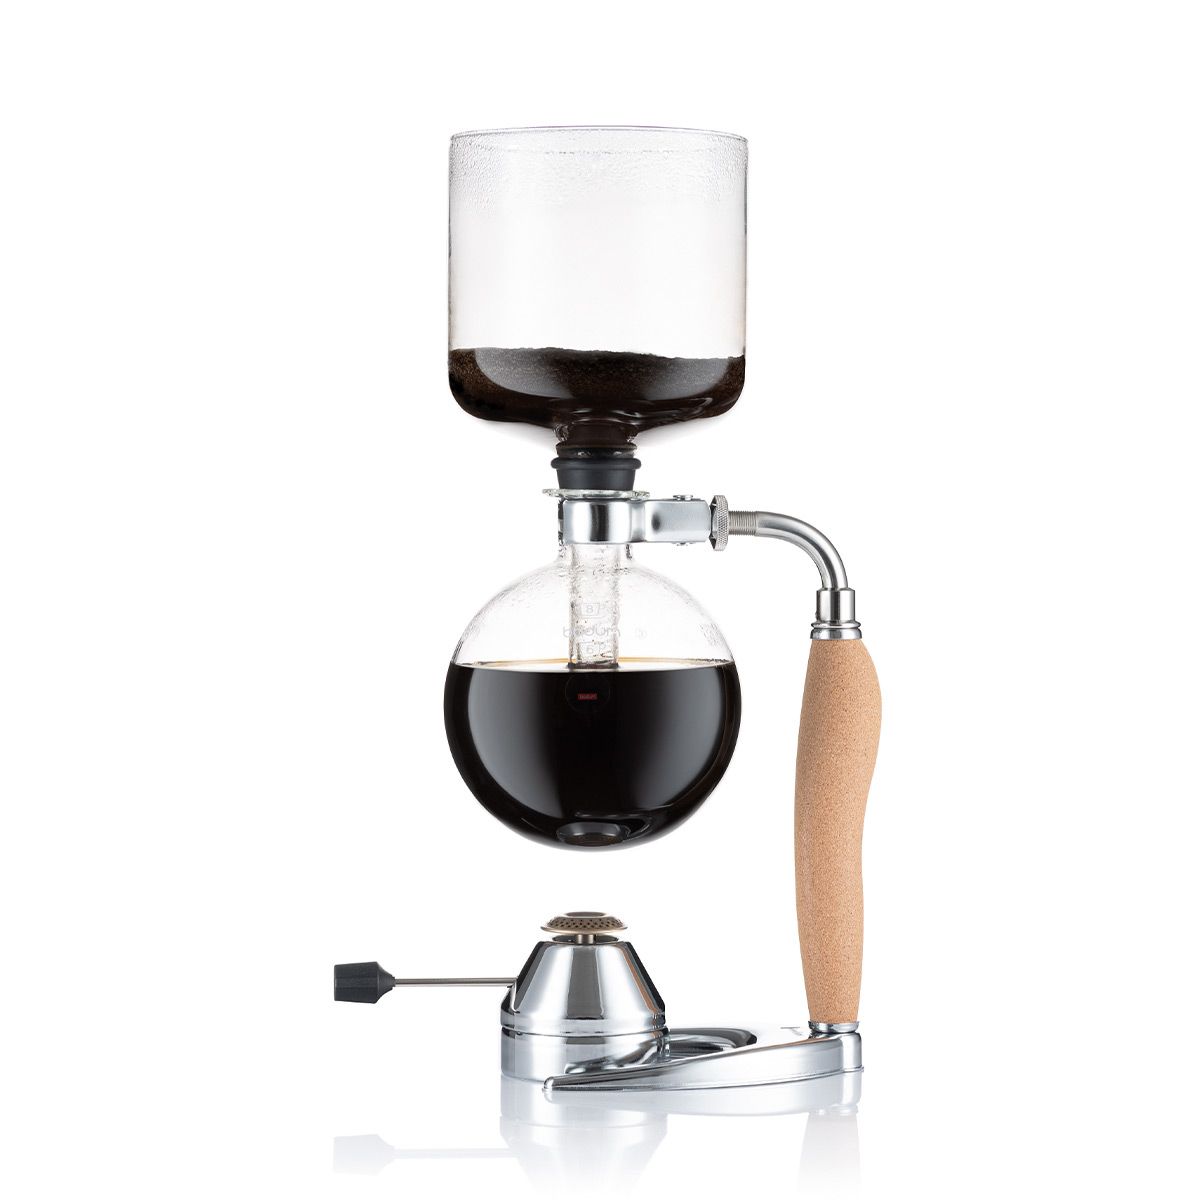 Bodum Mocha Vacuum Coffee Maker With Gas Burner, 8 Cups